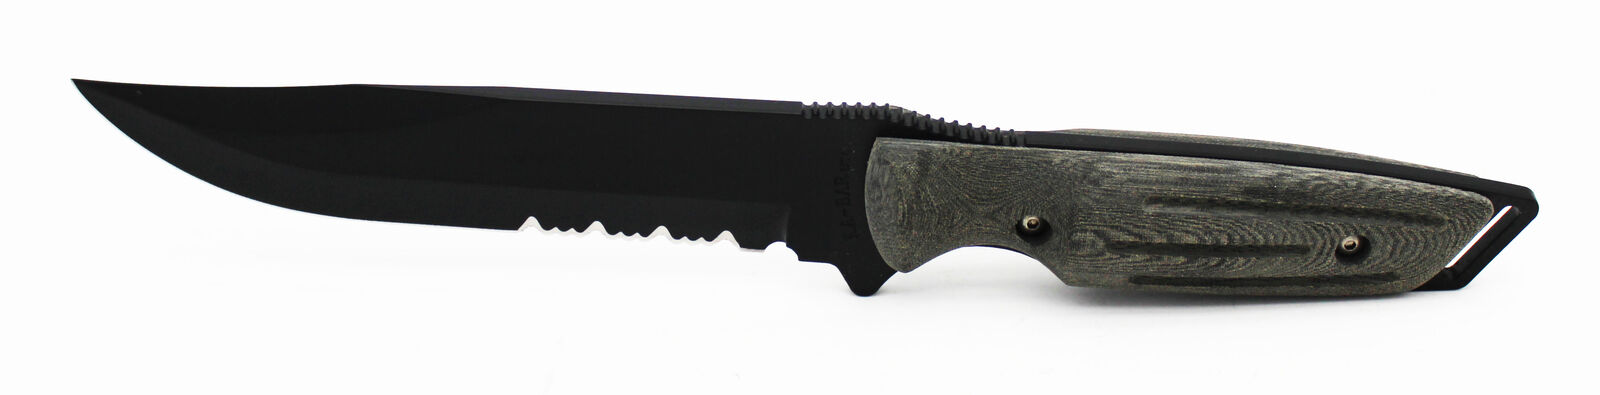 Discontinued Ka-Bar Eagle Combat Fixed Knife Micarta Handle Combo D2 Blade 1464